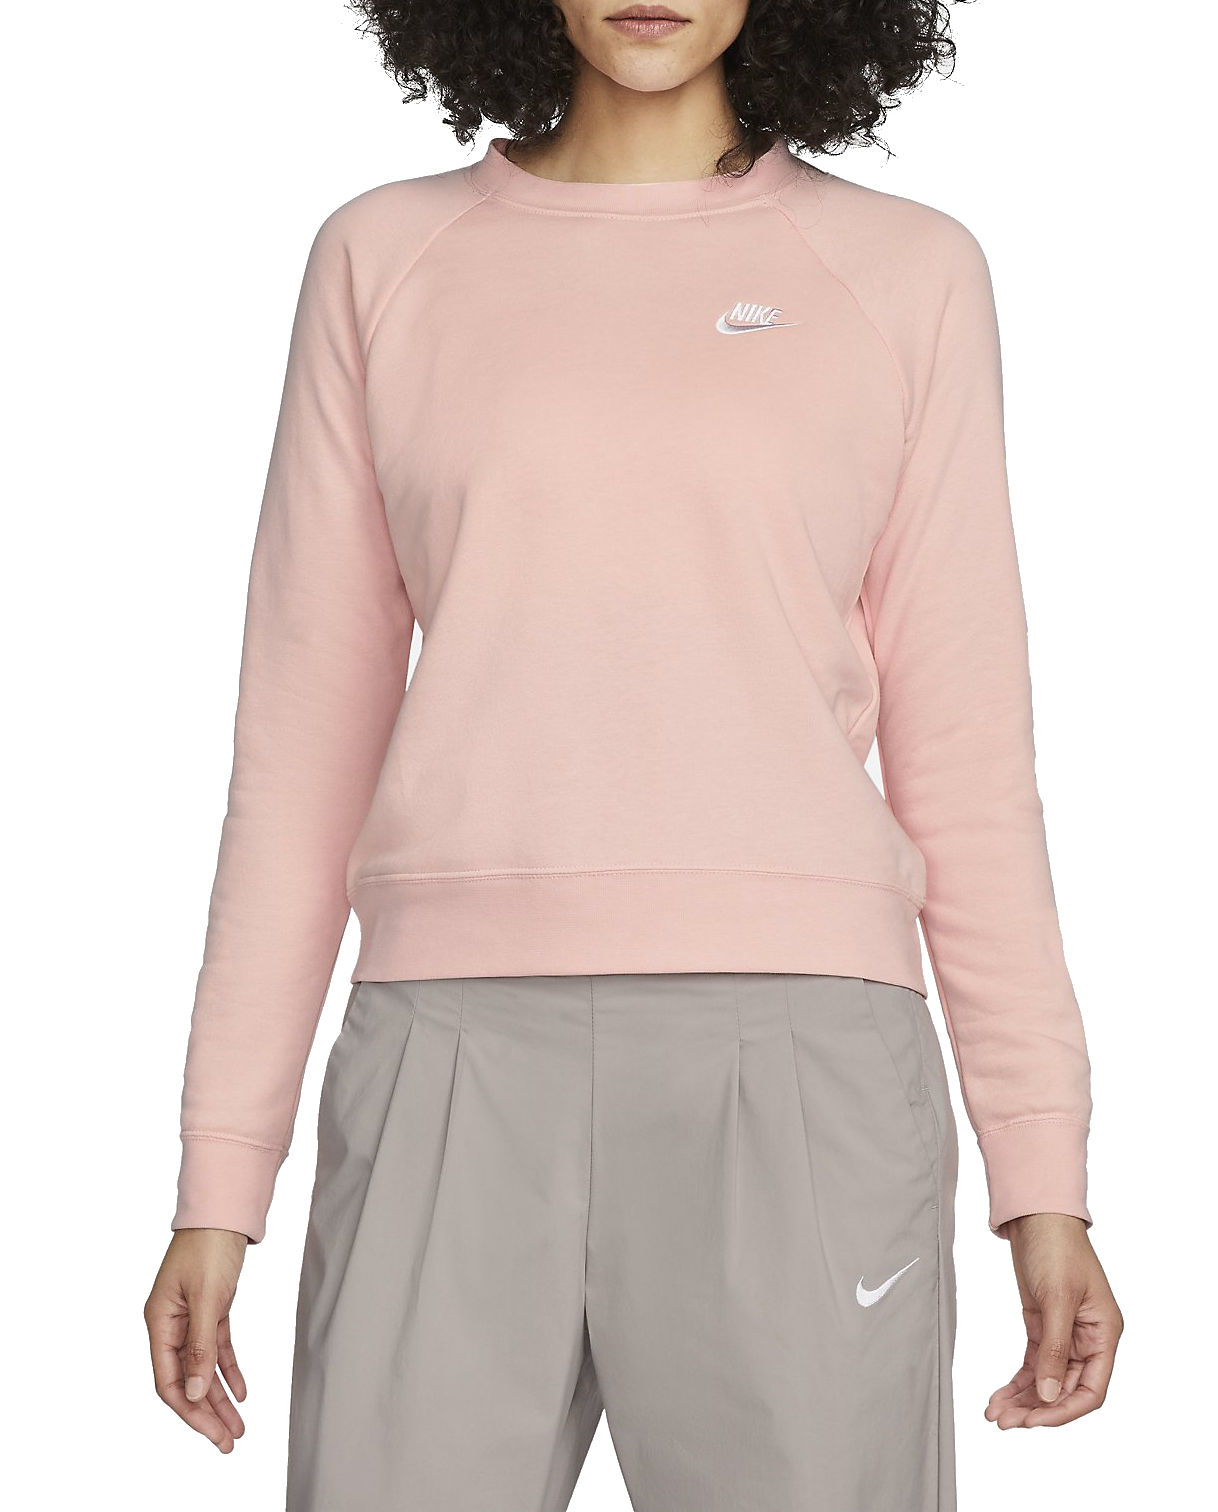 Sweatshirt Nike Sportswear Essential - Top4Running.com